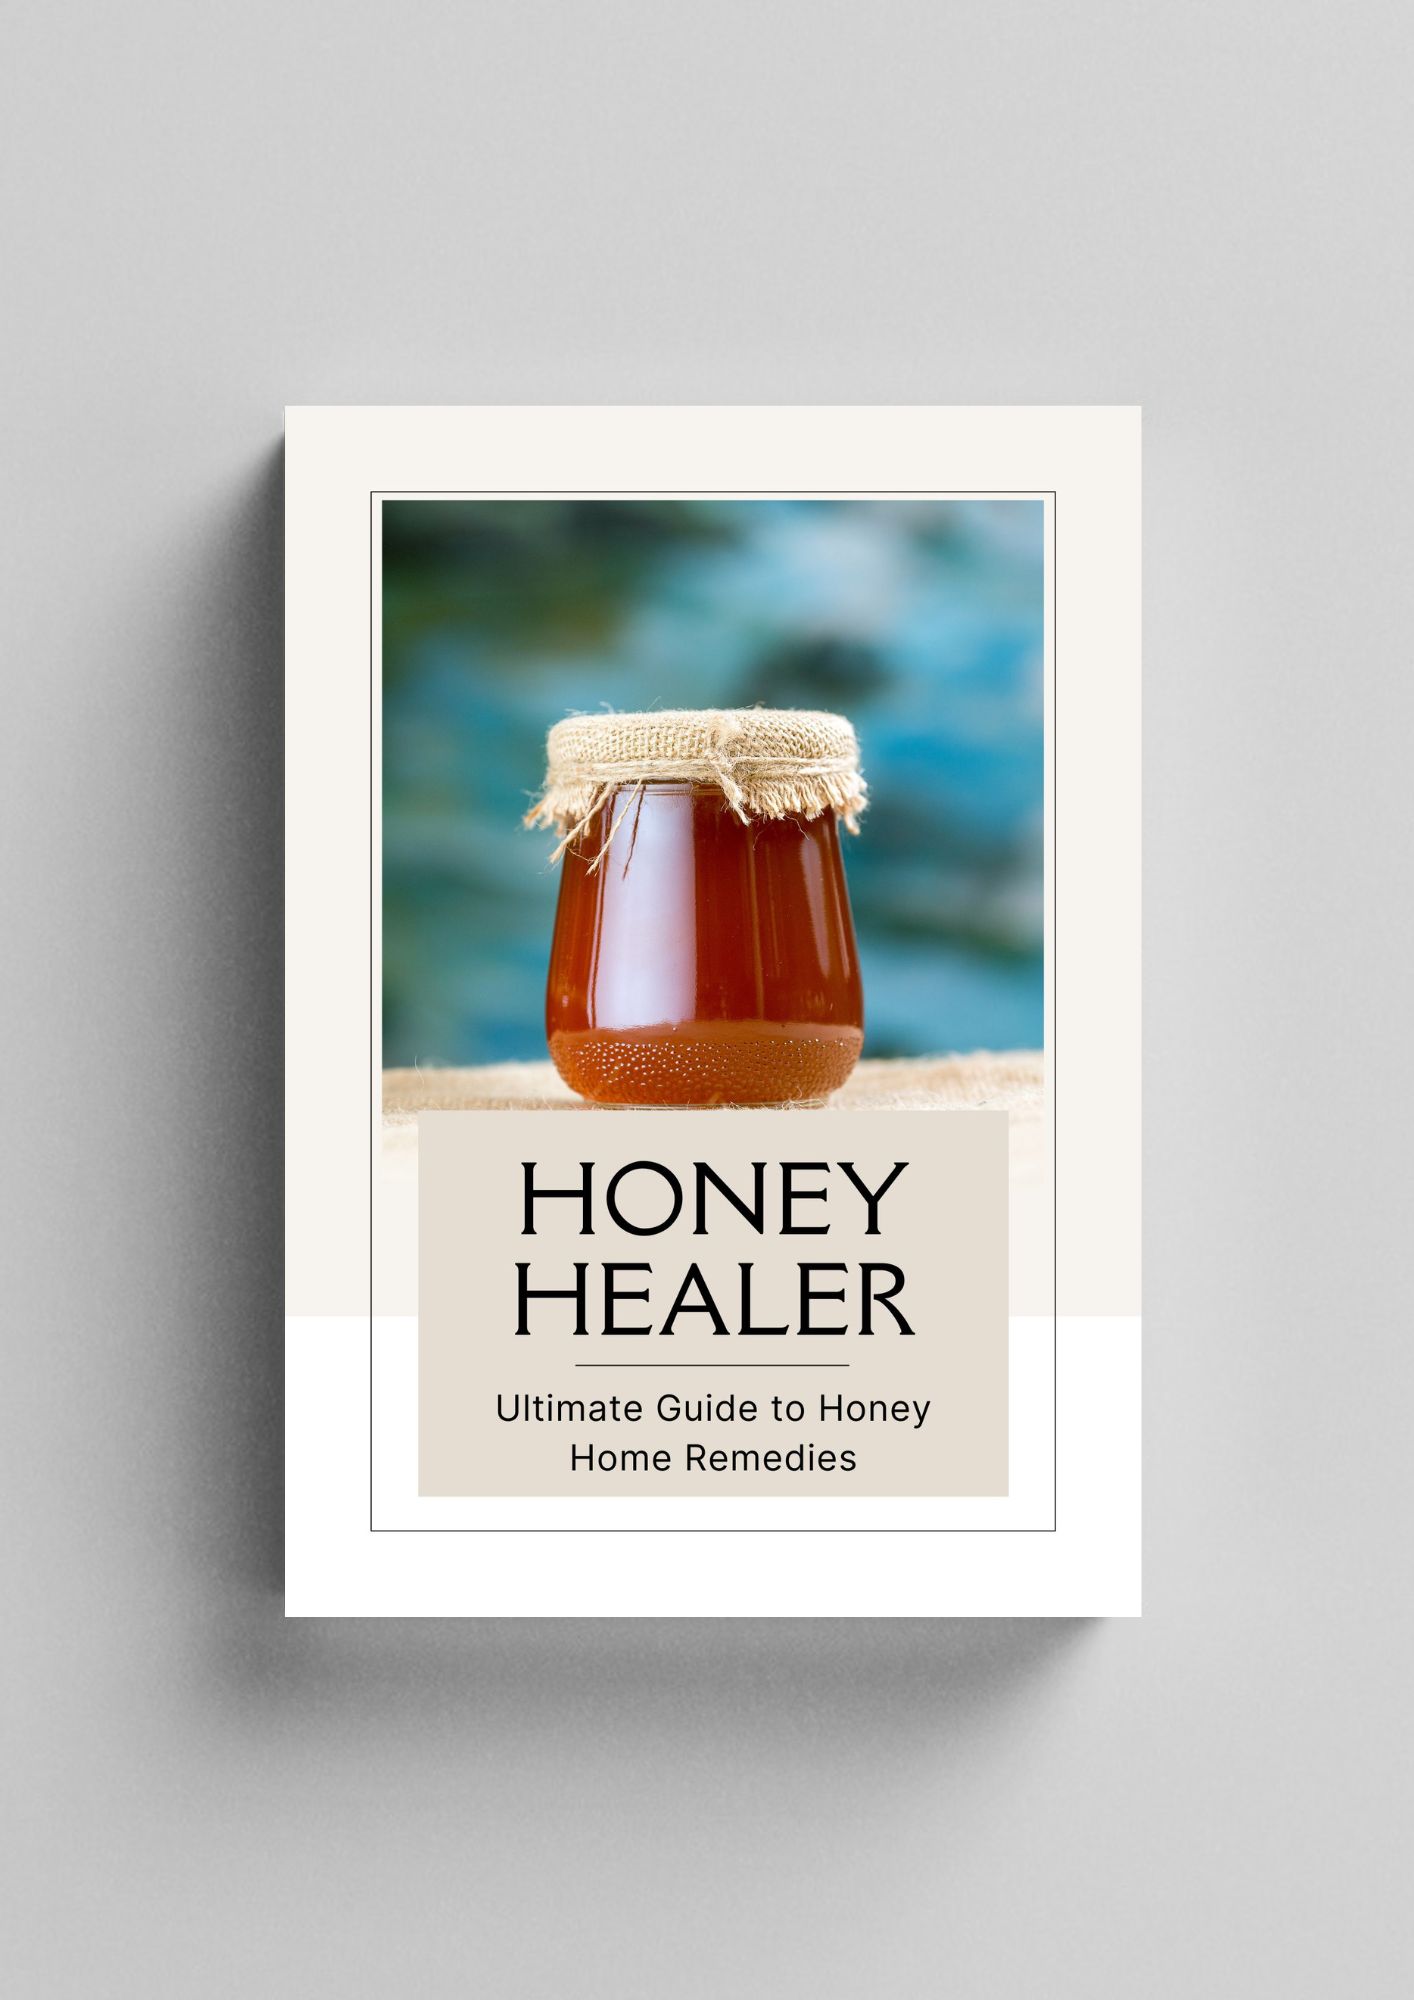 Honey healer book